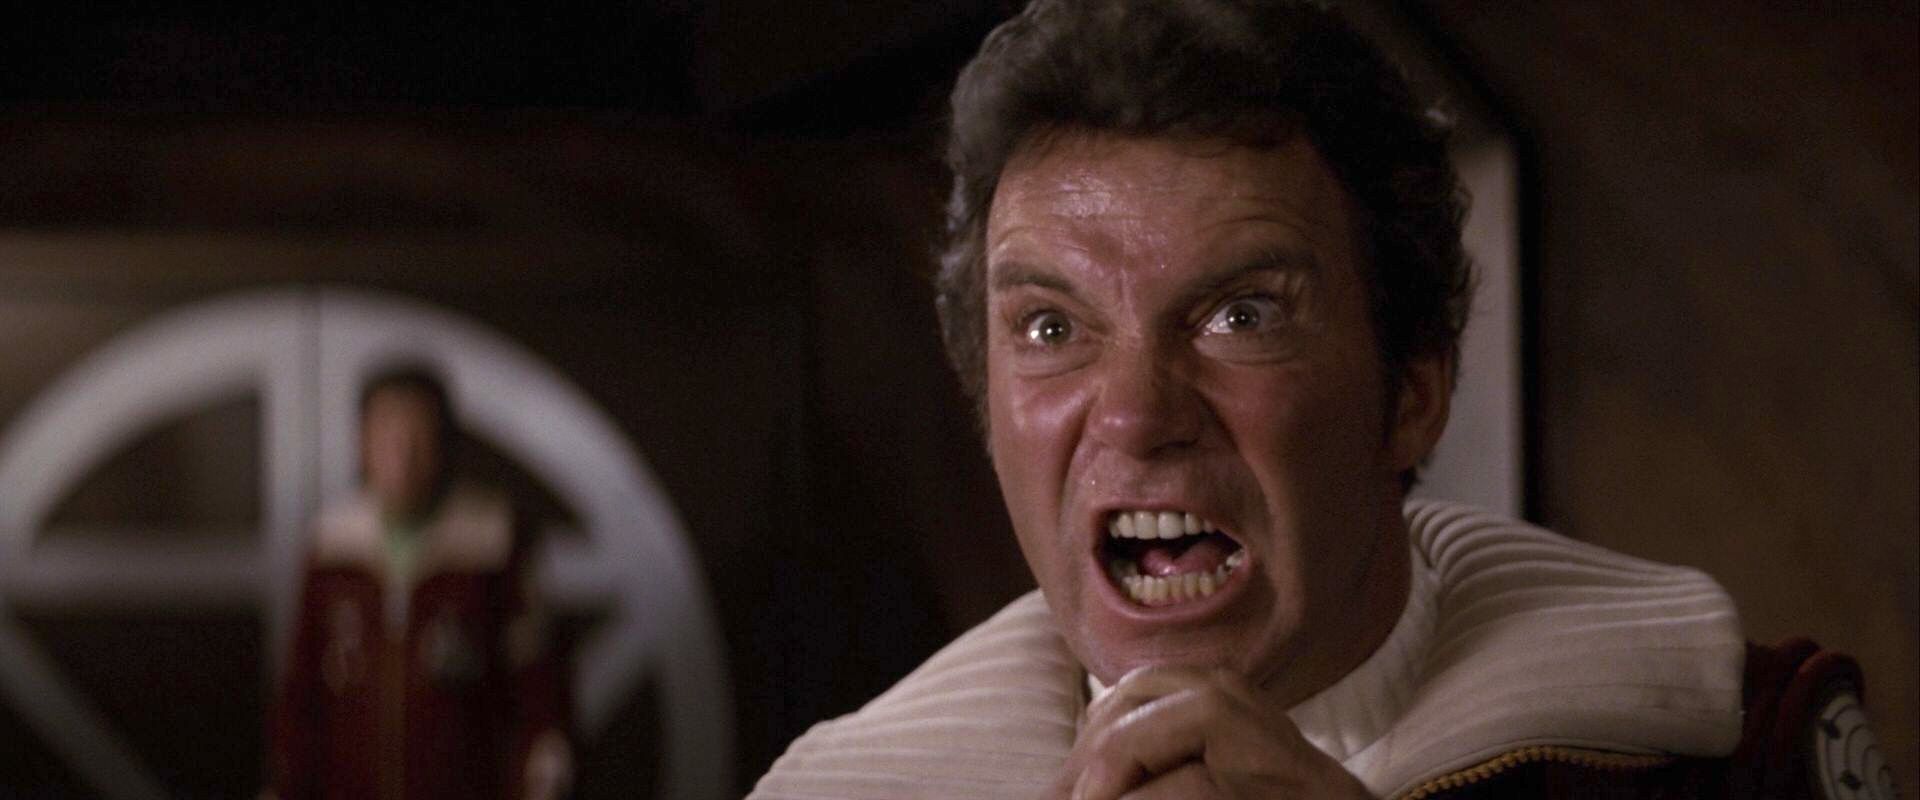 James T. Kirk (William Shatner) yelling KHAAAAAAN and showing his teeth